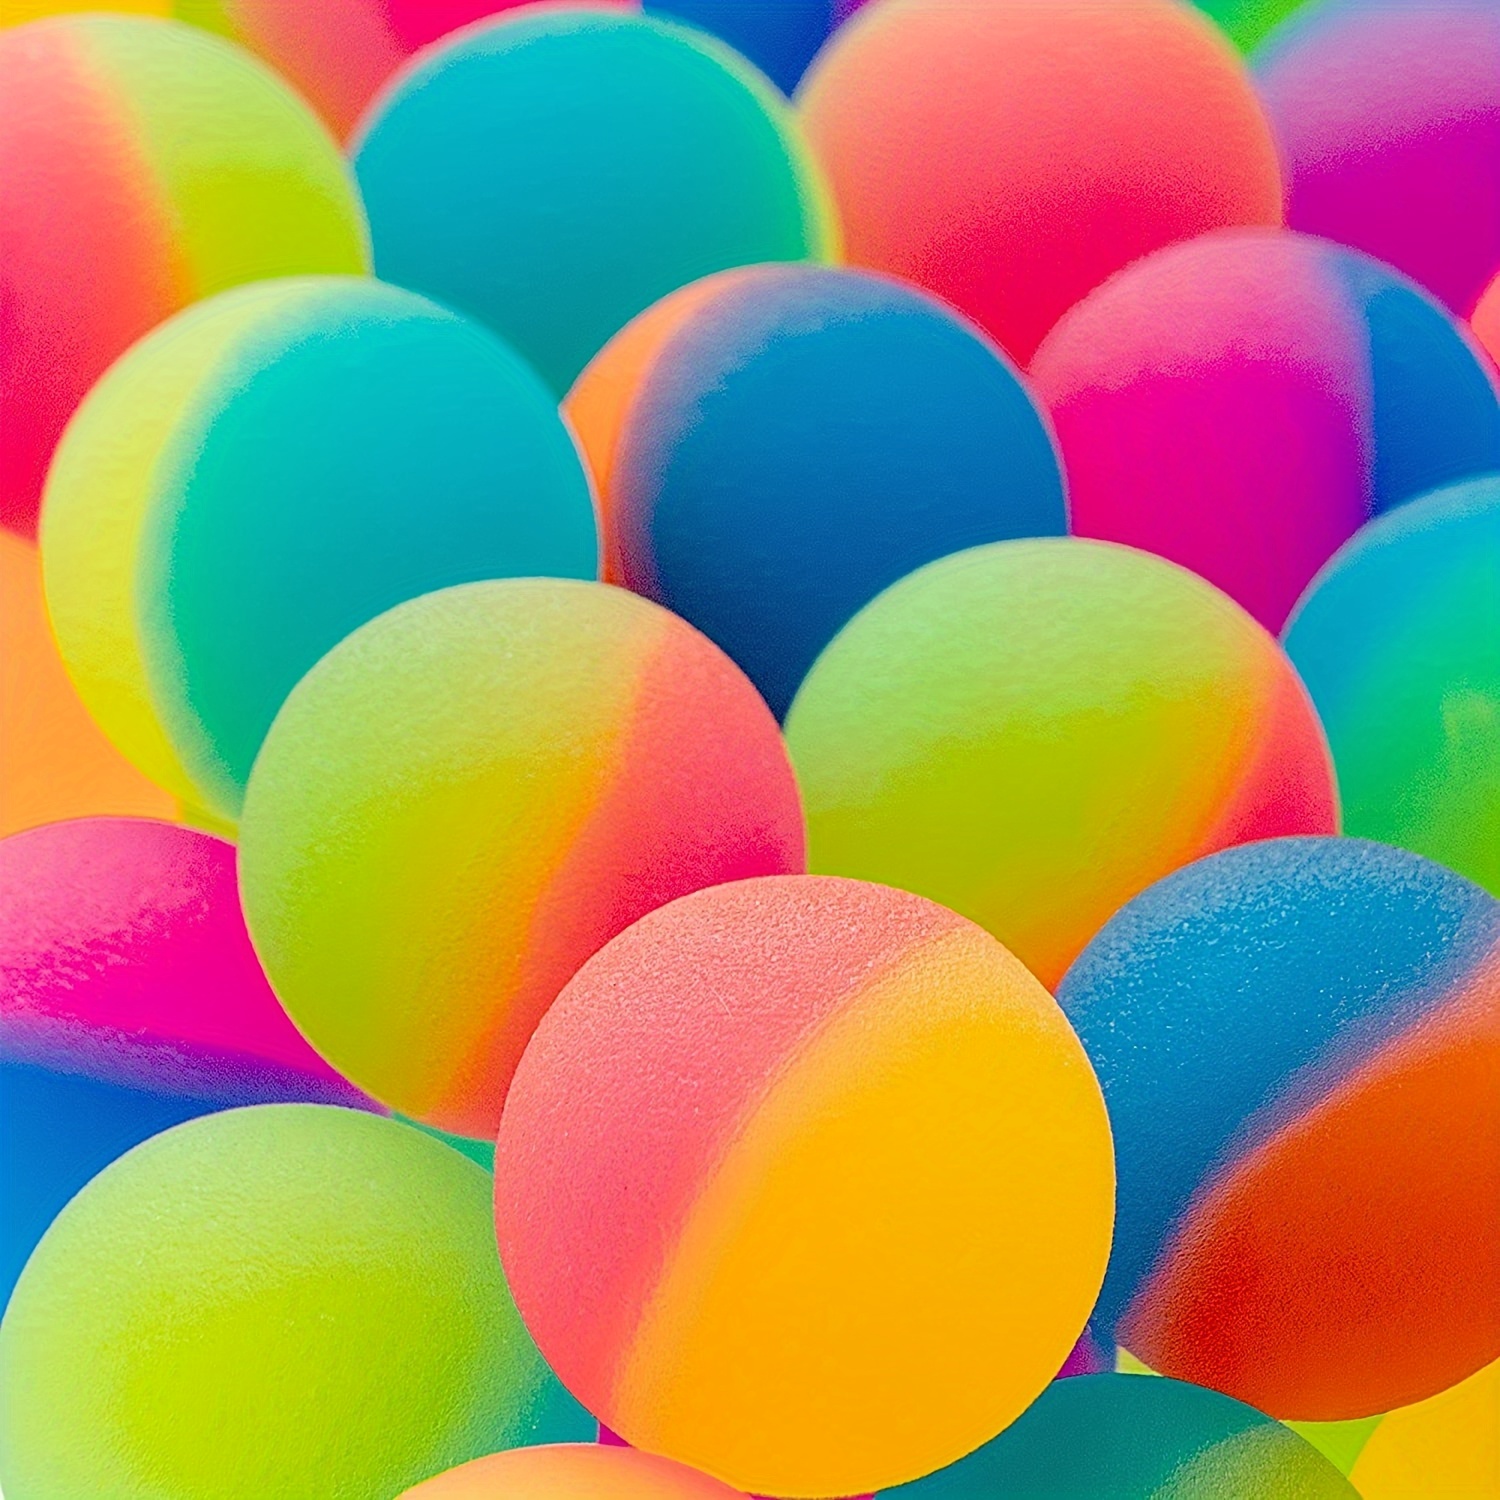 10 Pelotas Antiestres Neon Bola D Malla Cerebro Squishy Ball